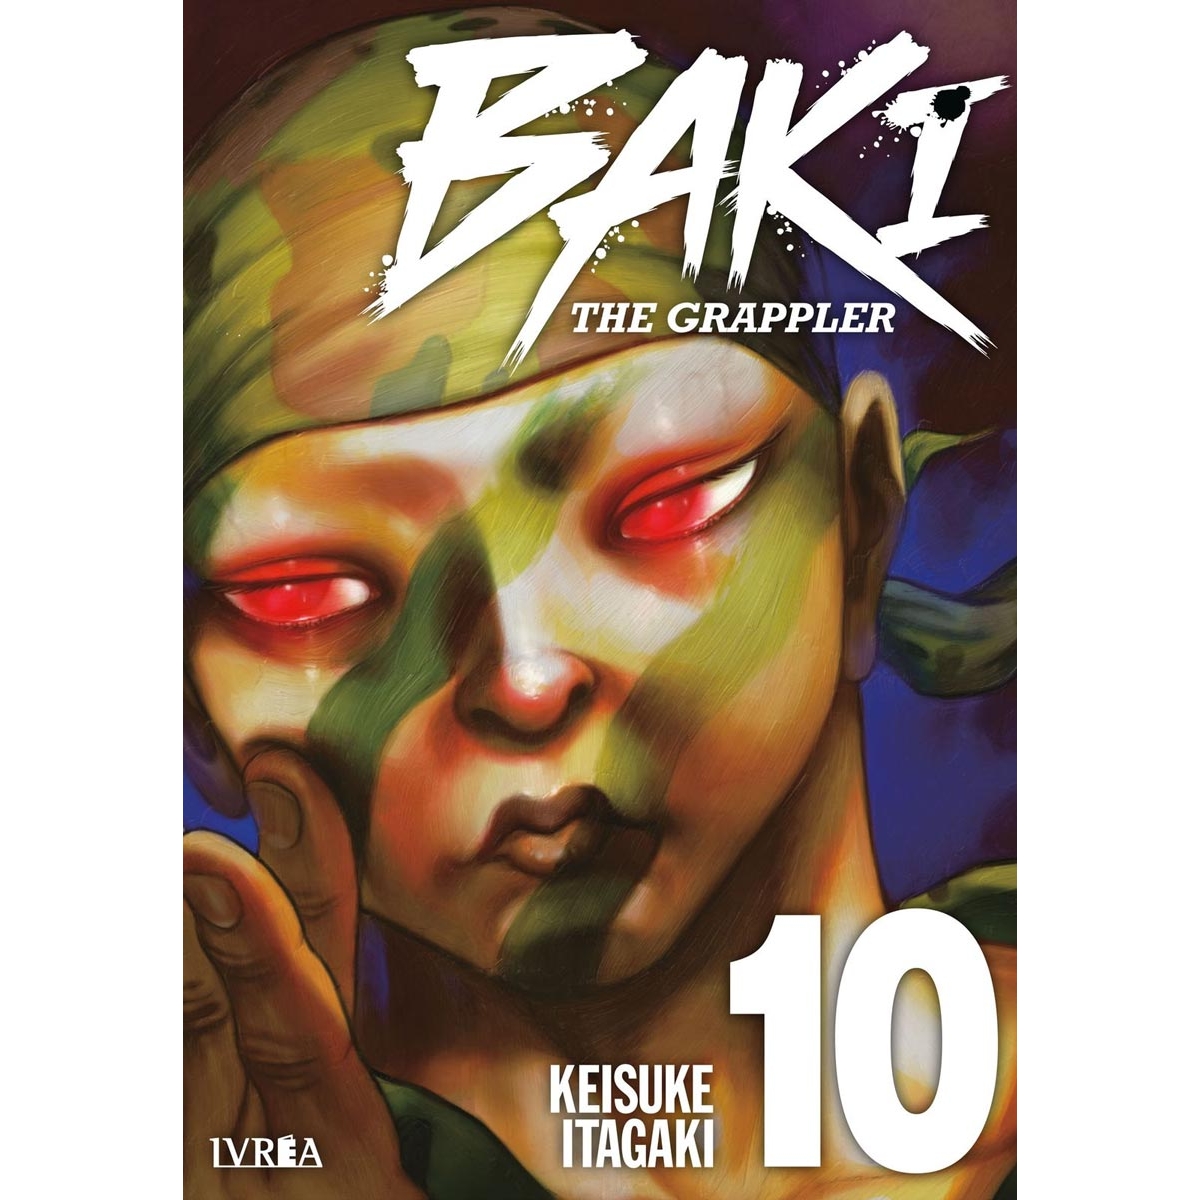 Baki the Grappler 10